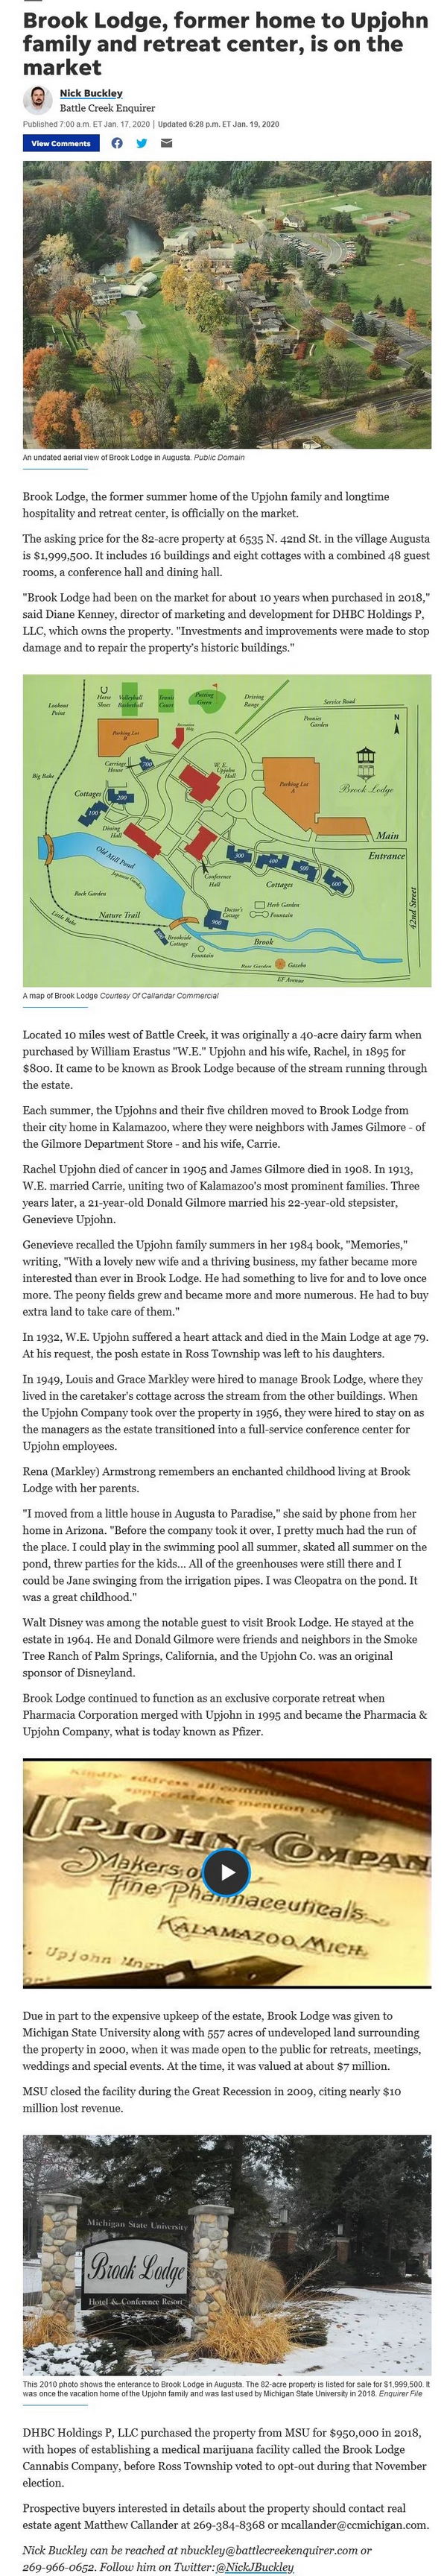 Brook Lodge - 2020 Article From Battle Creek Enquirer